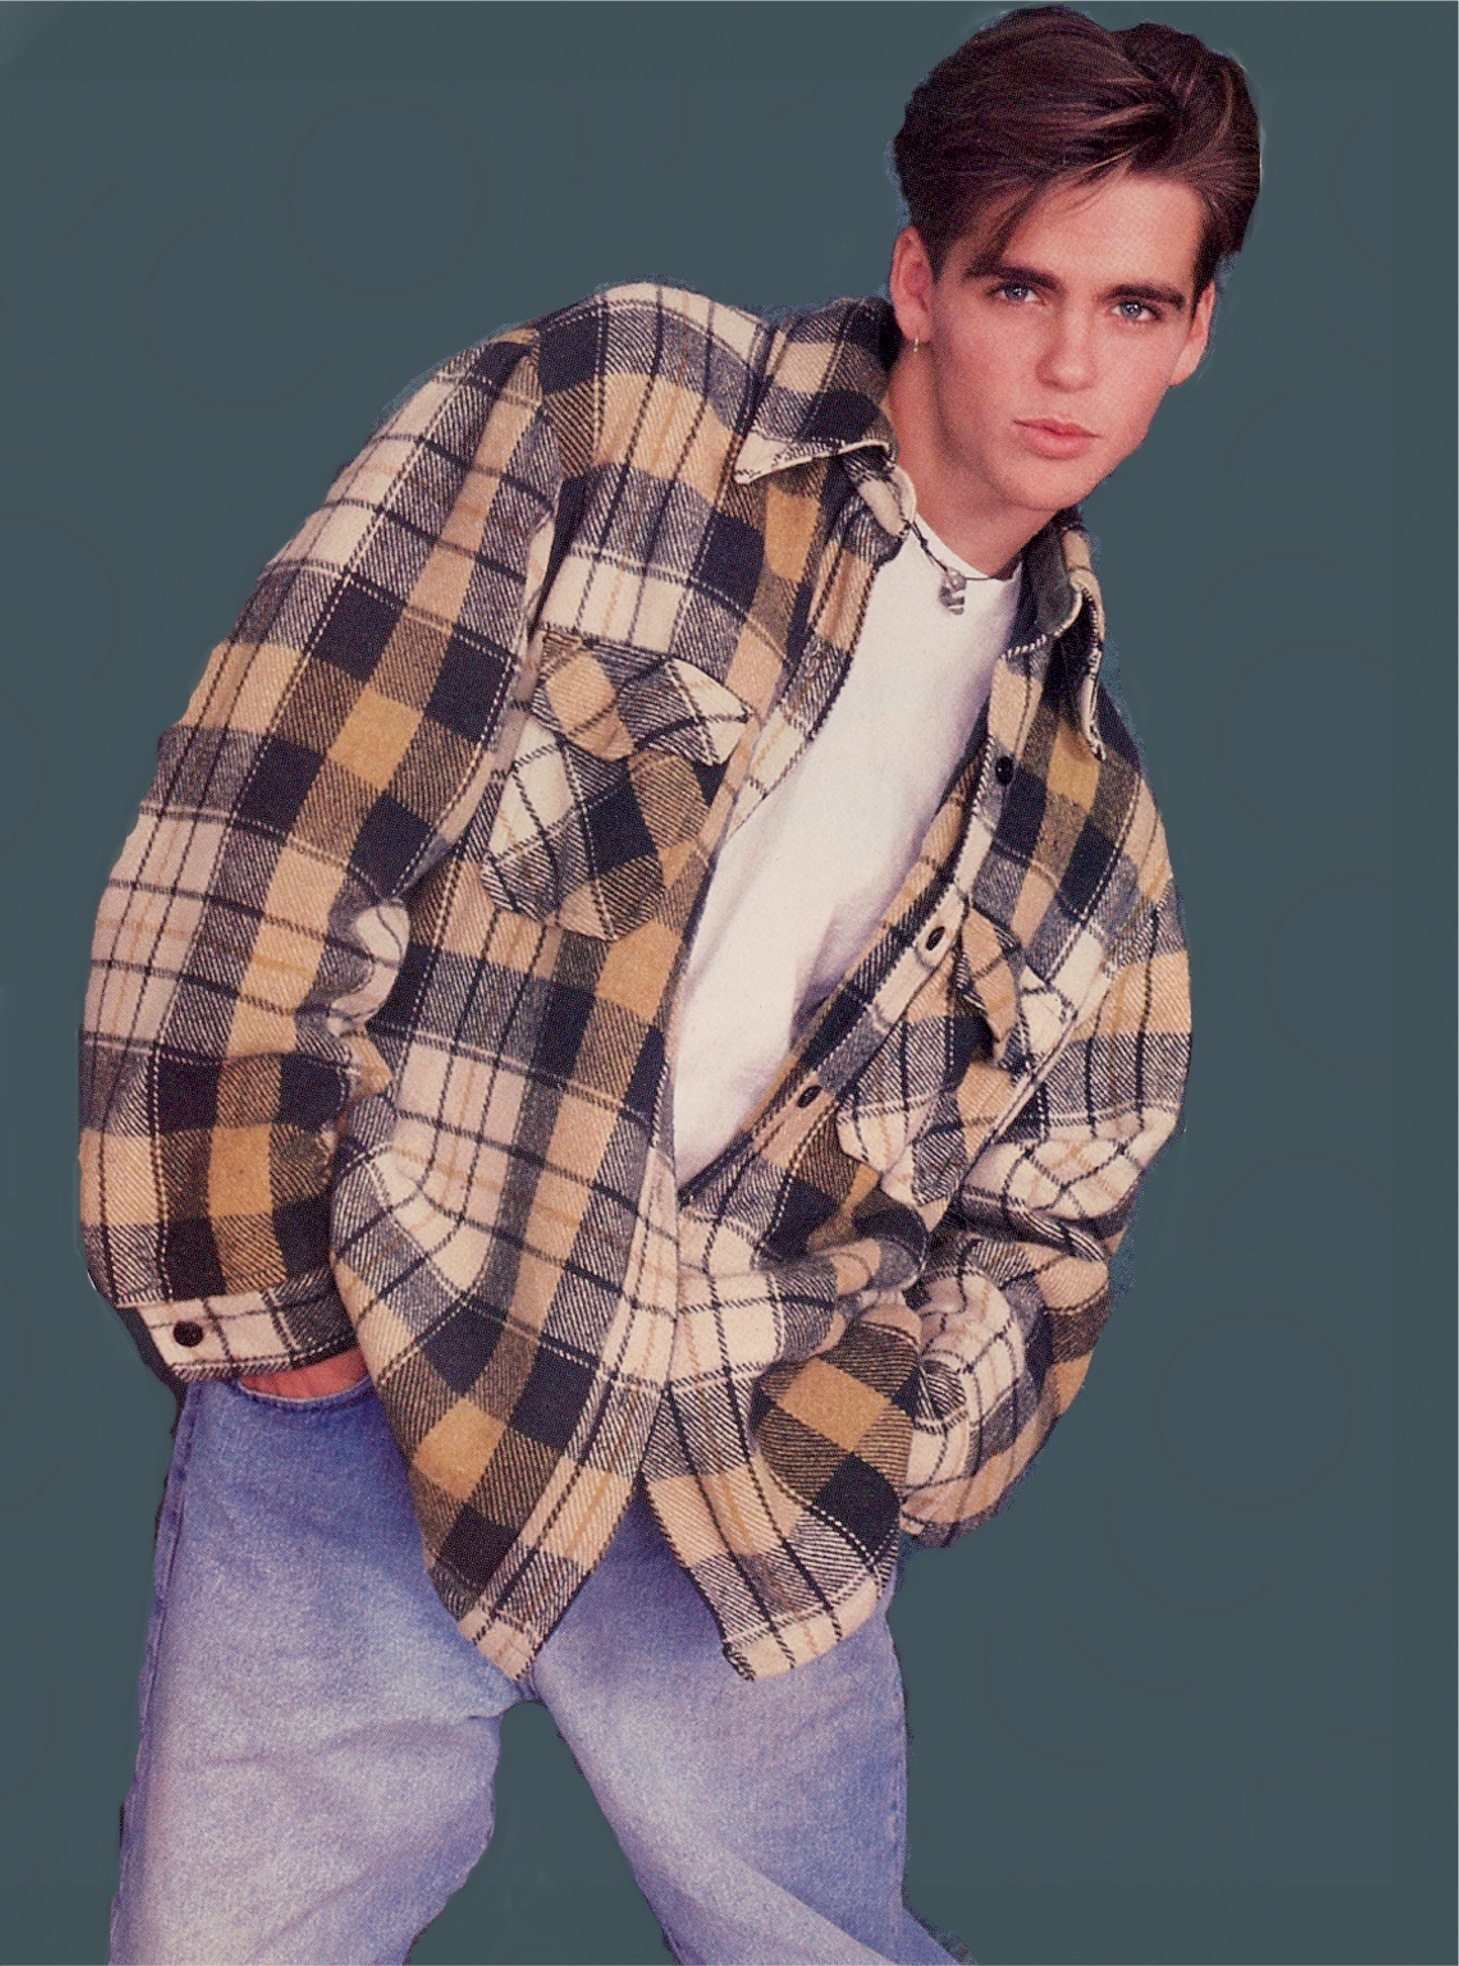 1990 е мода. 80-Е Америка мода мужчины. Шейн МАКДЕРМОТТ. 80е мода Америка мужская. Америка 80е стиль мужской.